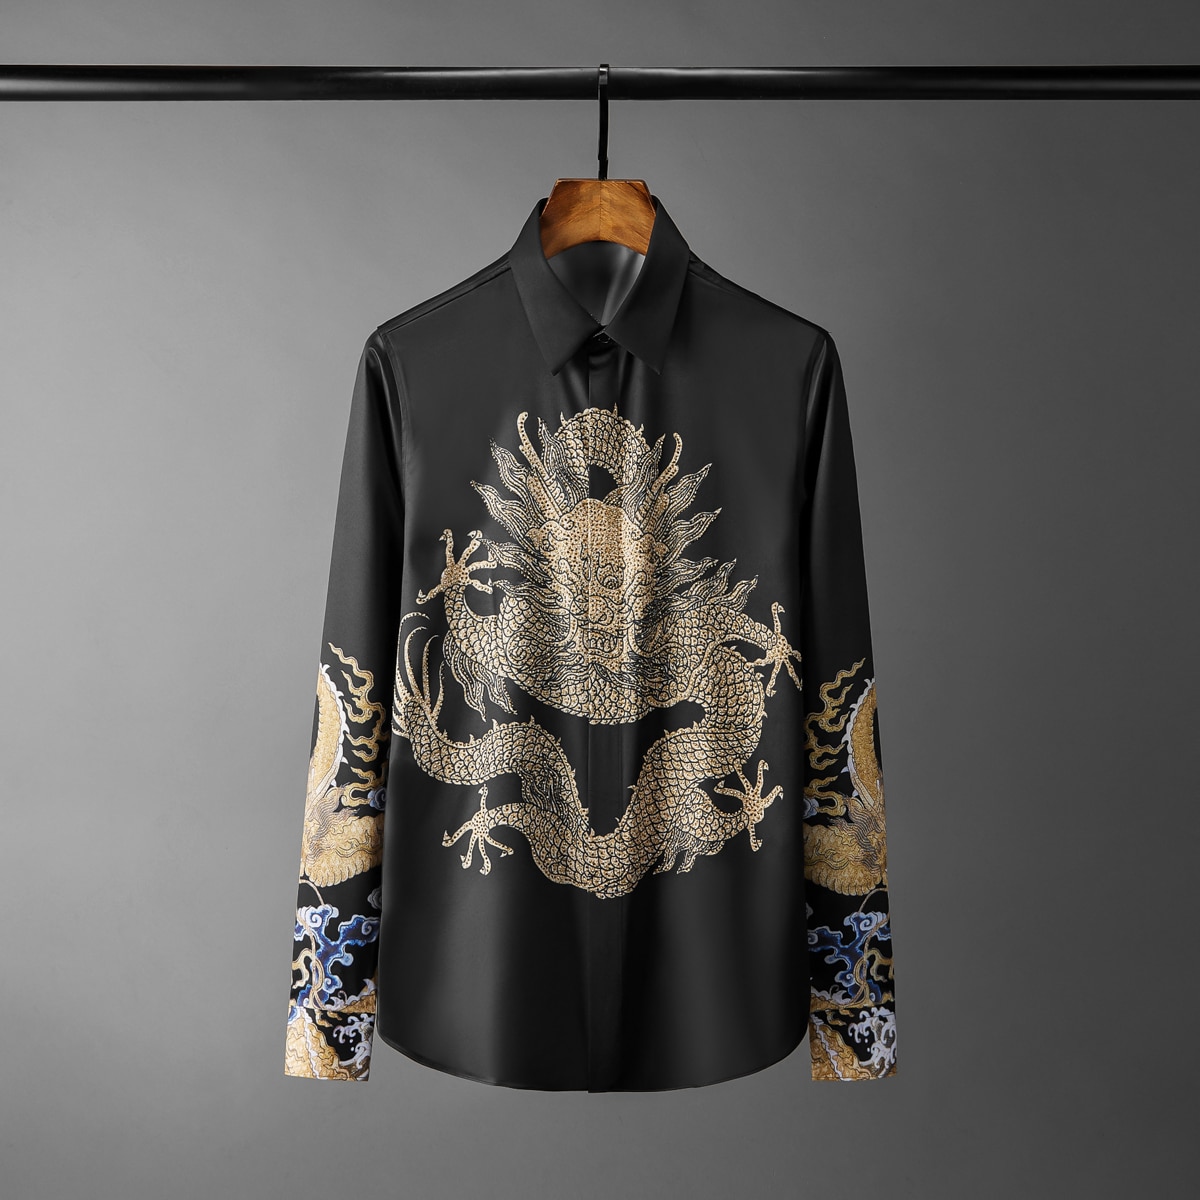 Minglu Zwart Heren Shirts Luxe China Dragon Gedrukt Lange Mouw Heren Dress Shirts Plus Size 4xl Slim Fit Diamond Man shirts